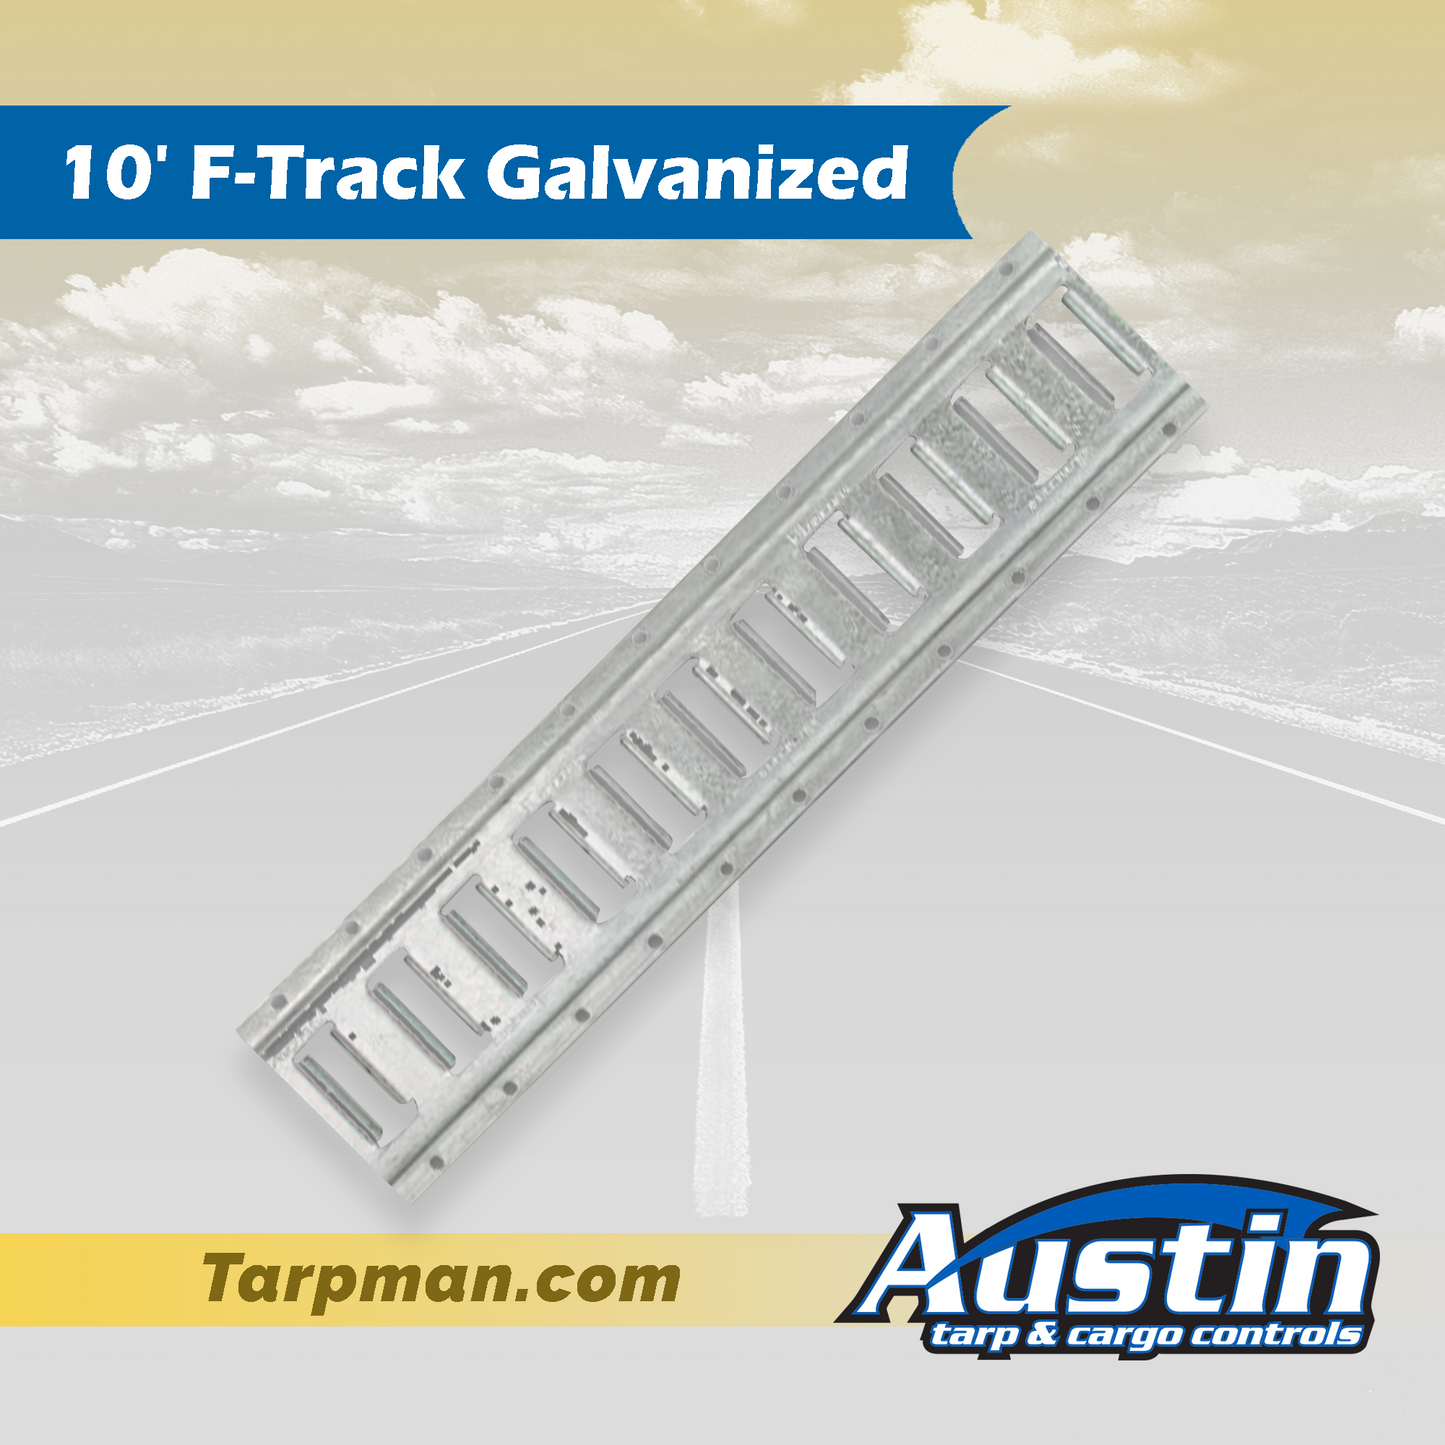 10' F-Track Galvanized Tarpman.com | Austin Tarp & Cargo Controls